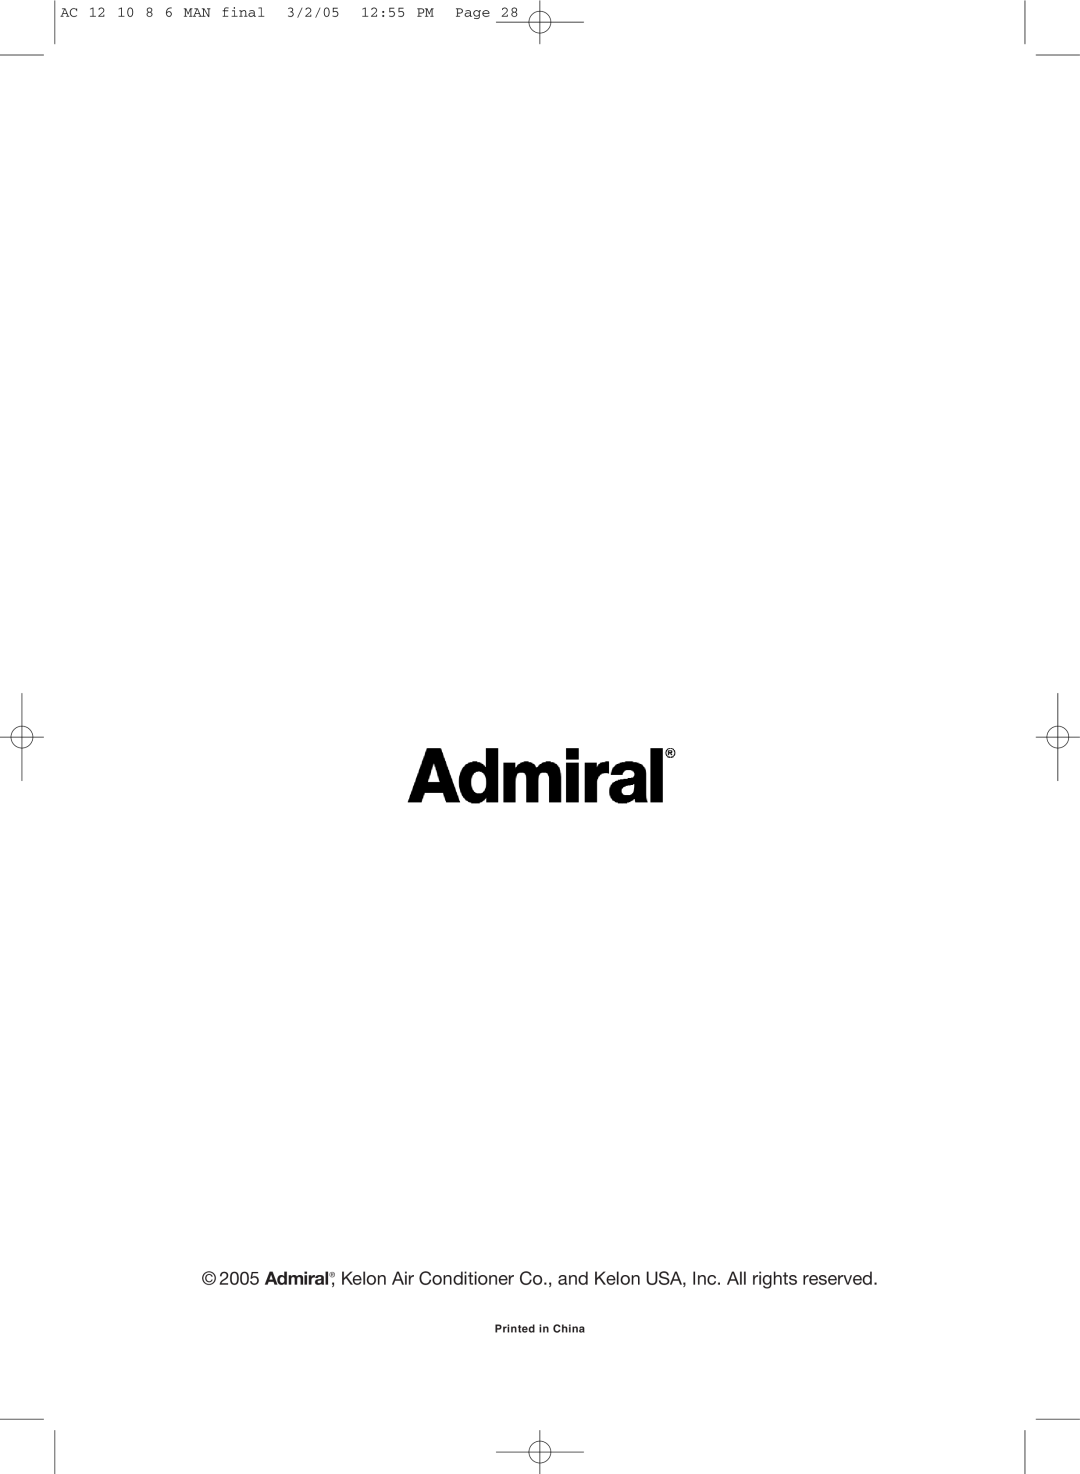 Admiral AAWV-12CR1FAU, AAWV-06CR1FAU, AAWV-08CR1FAU, AAWV-10CR1FAU manual AC 12 10 8 6 MAN final 3/2/05 12 55 PM Page 